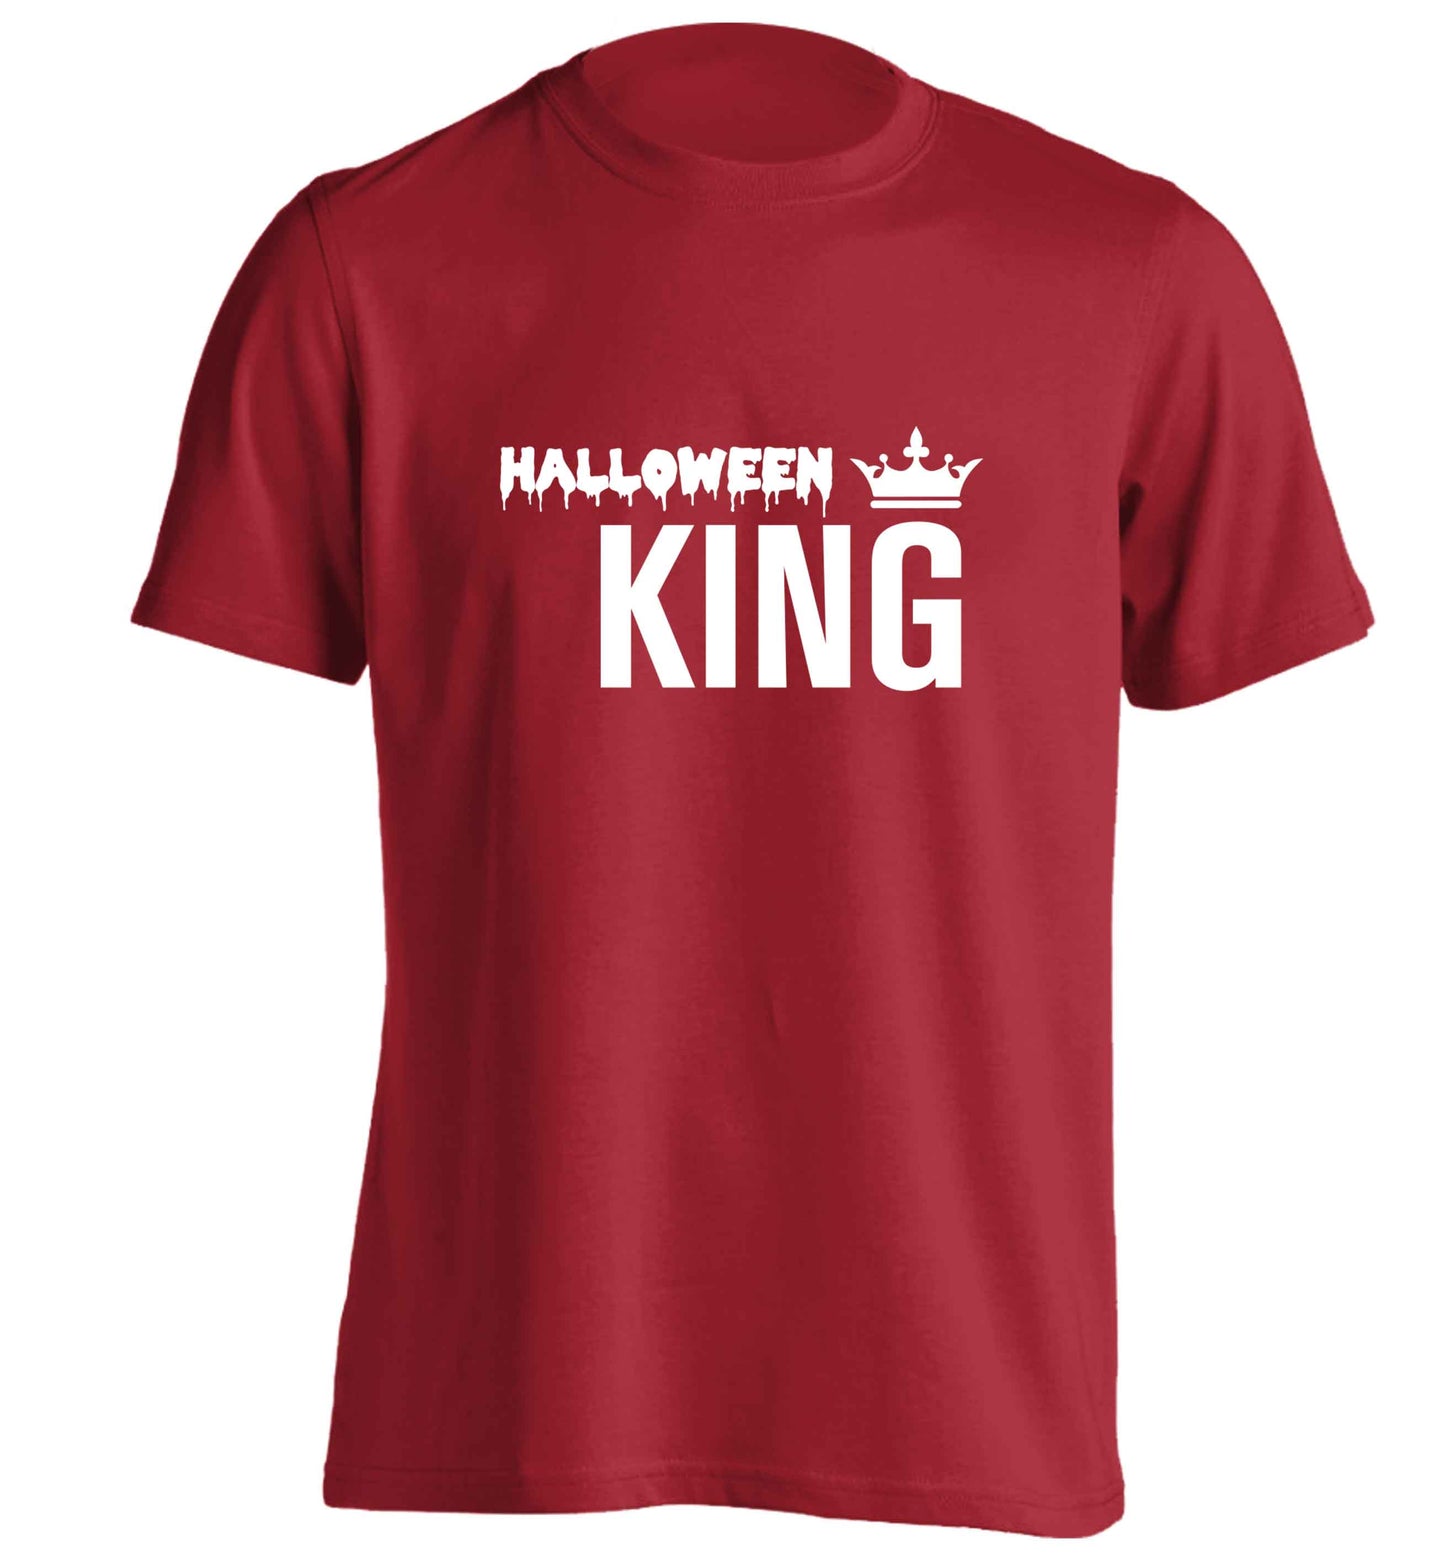 Halloween king adults unisex red Tshirt 2XL